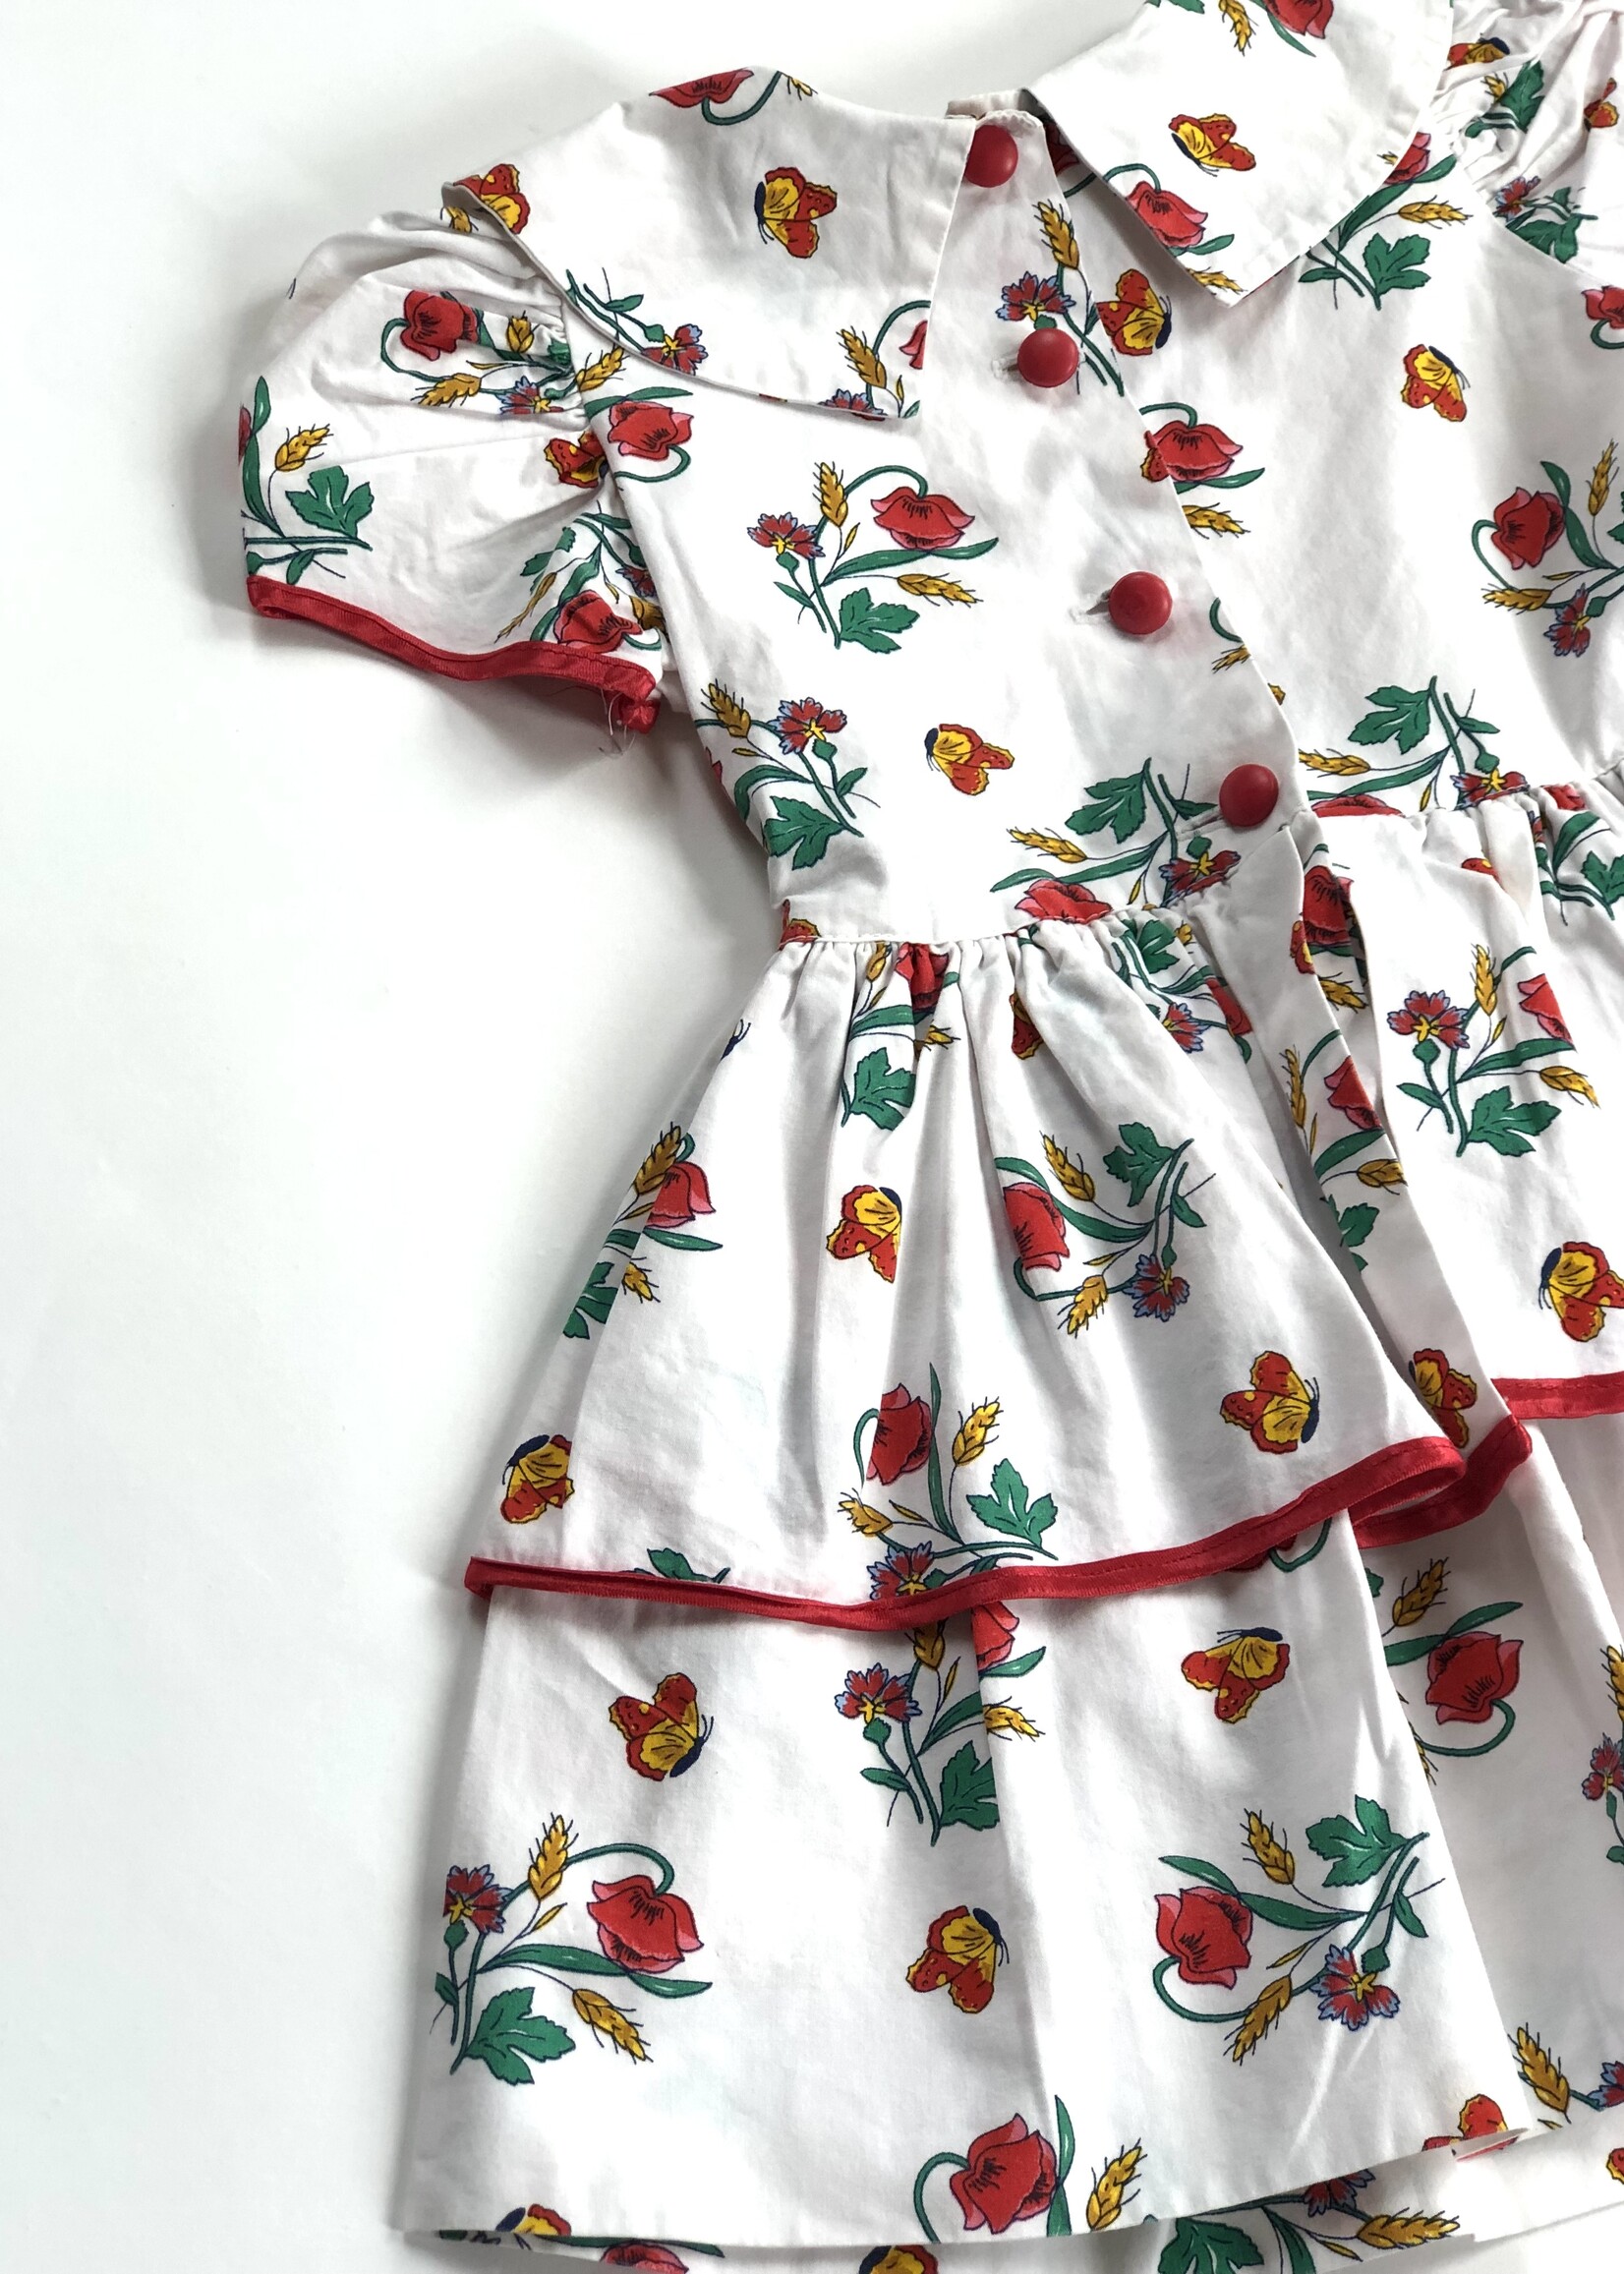 Handmade Poppy & Butterfly frilly dress 18m